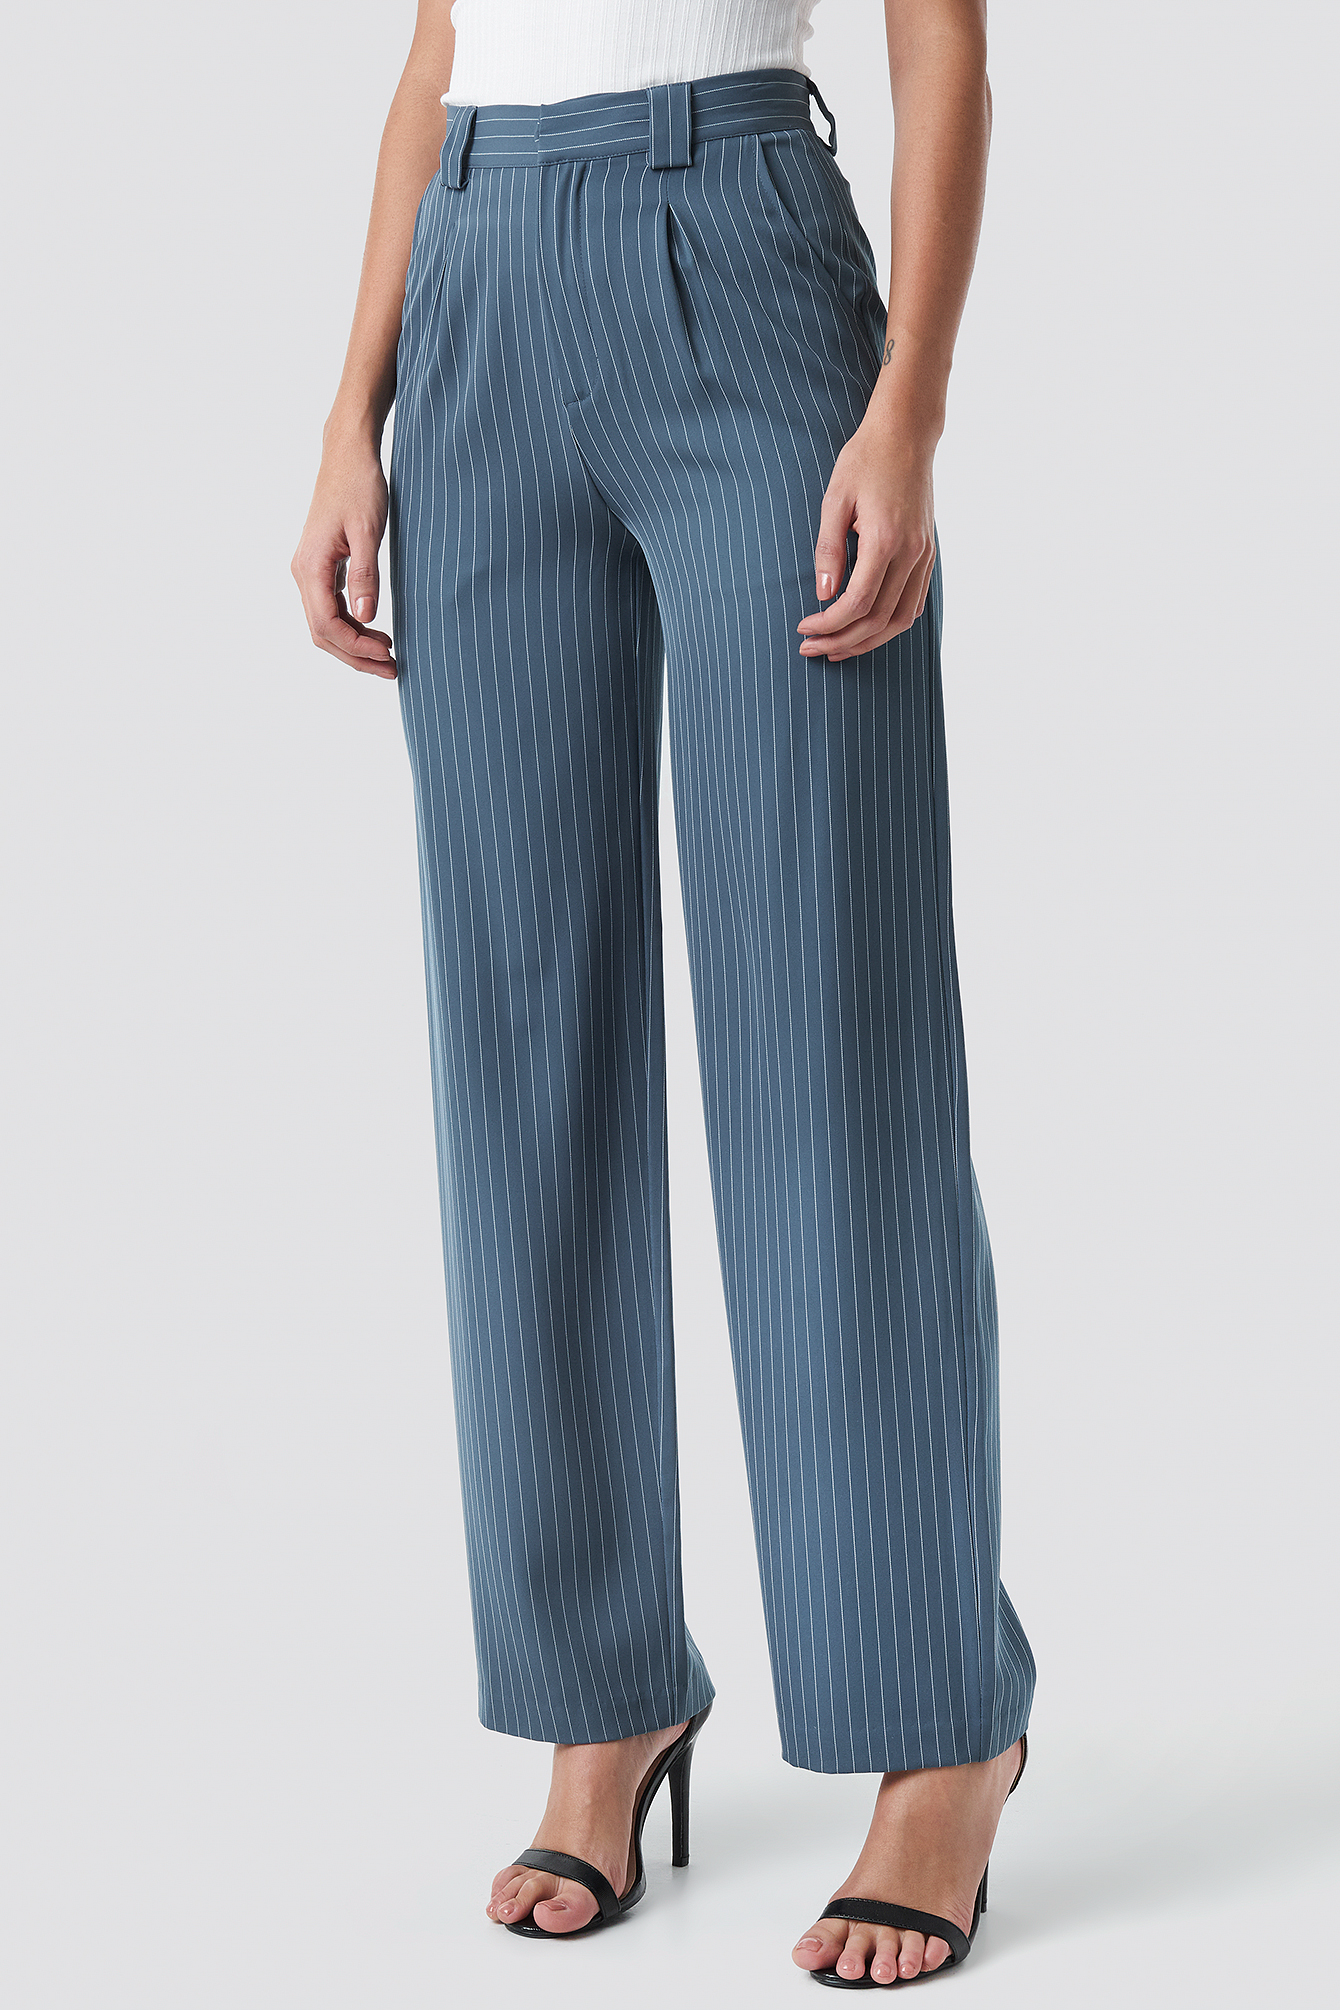 Dusty Blue Flared Striped Pants